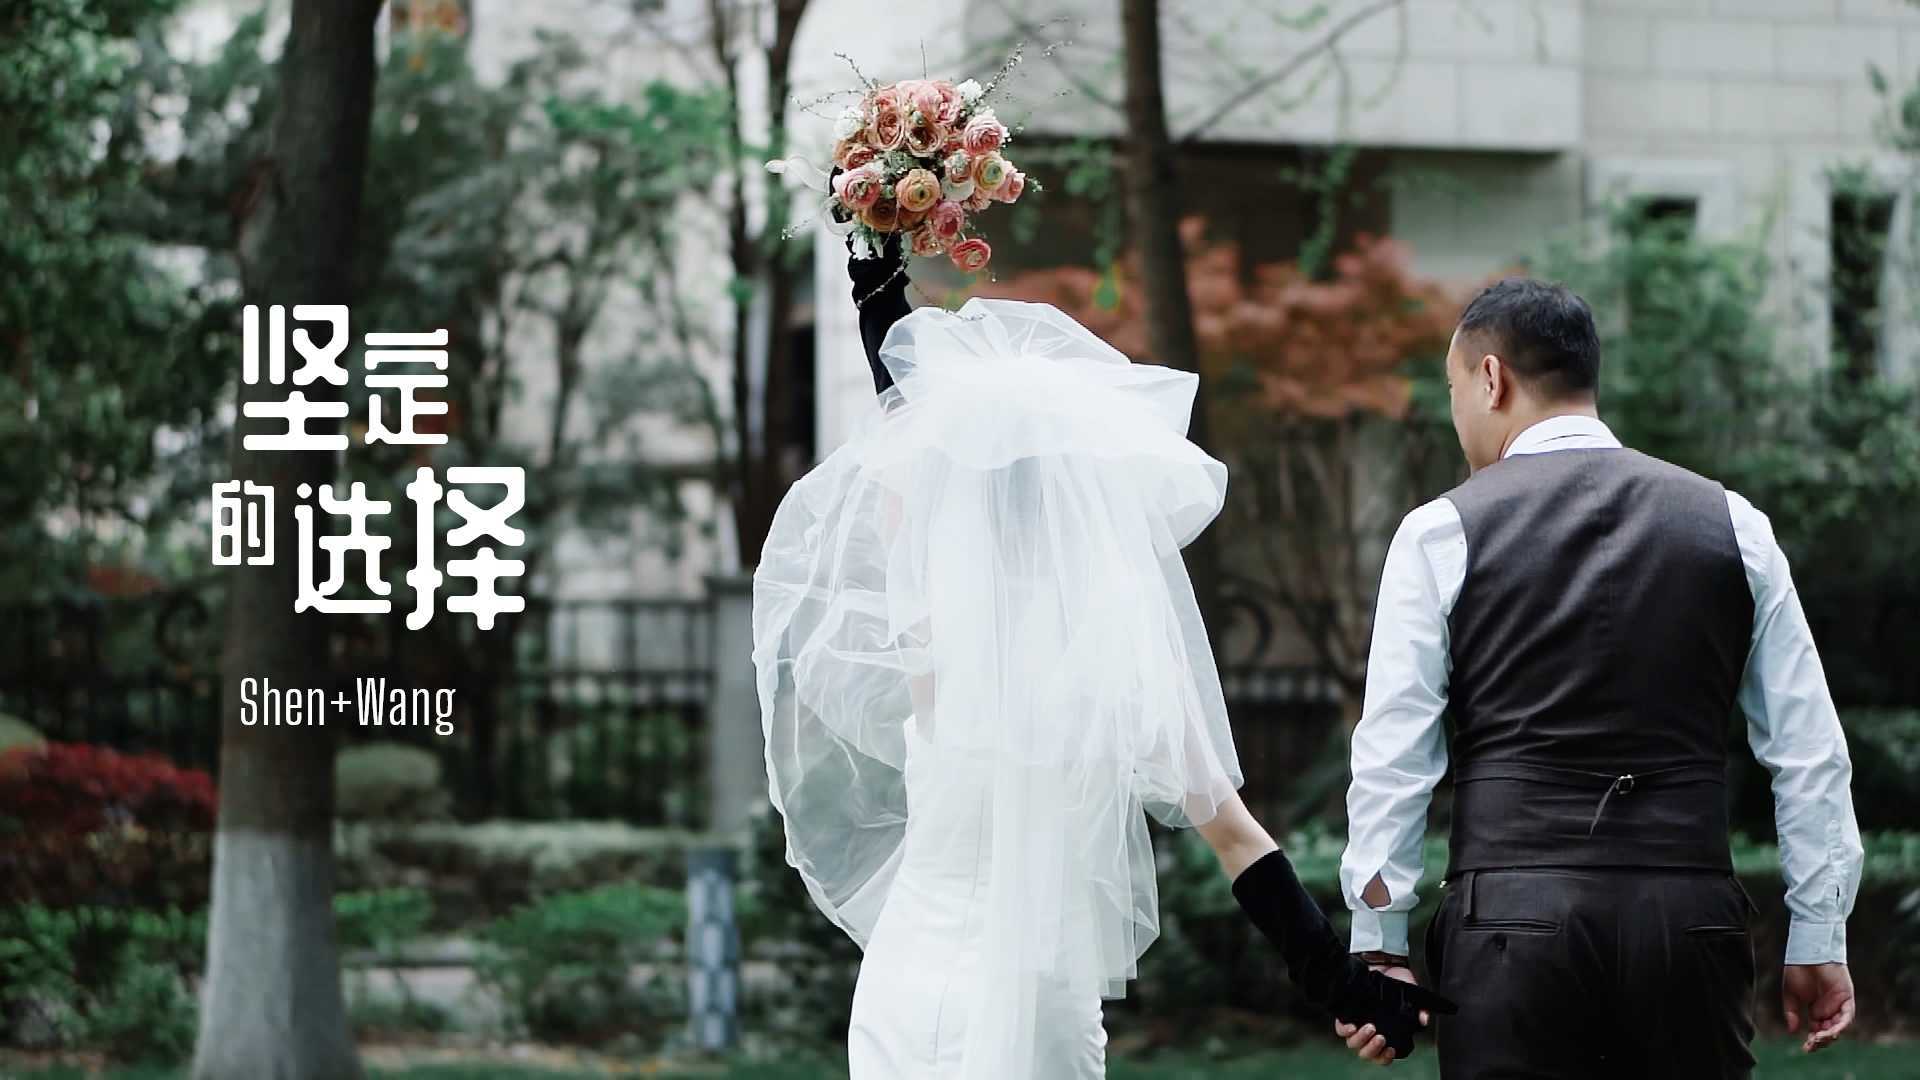 Shen+Wang wedding film「坚定的选择」